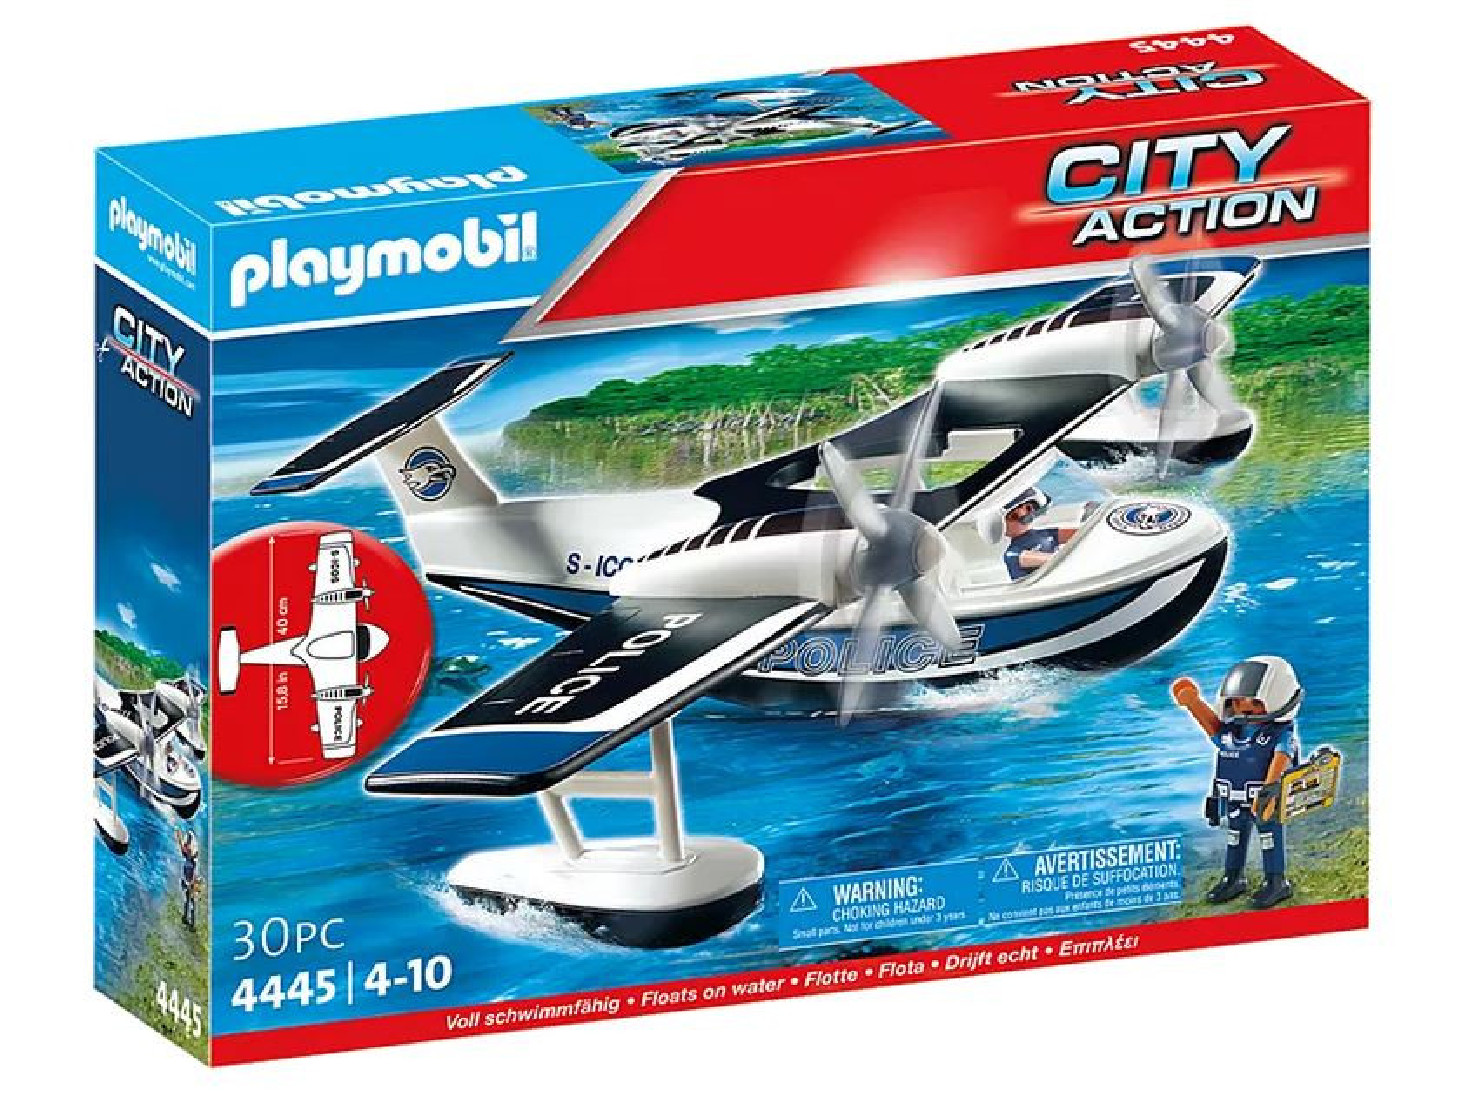 City Action Αστυνομικό υδροπλάνο 4445 Playmobil